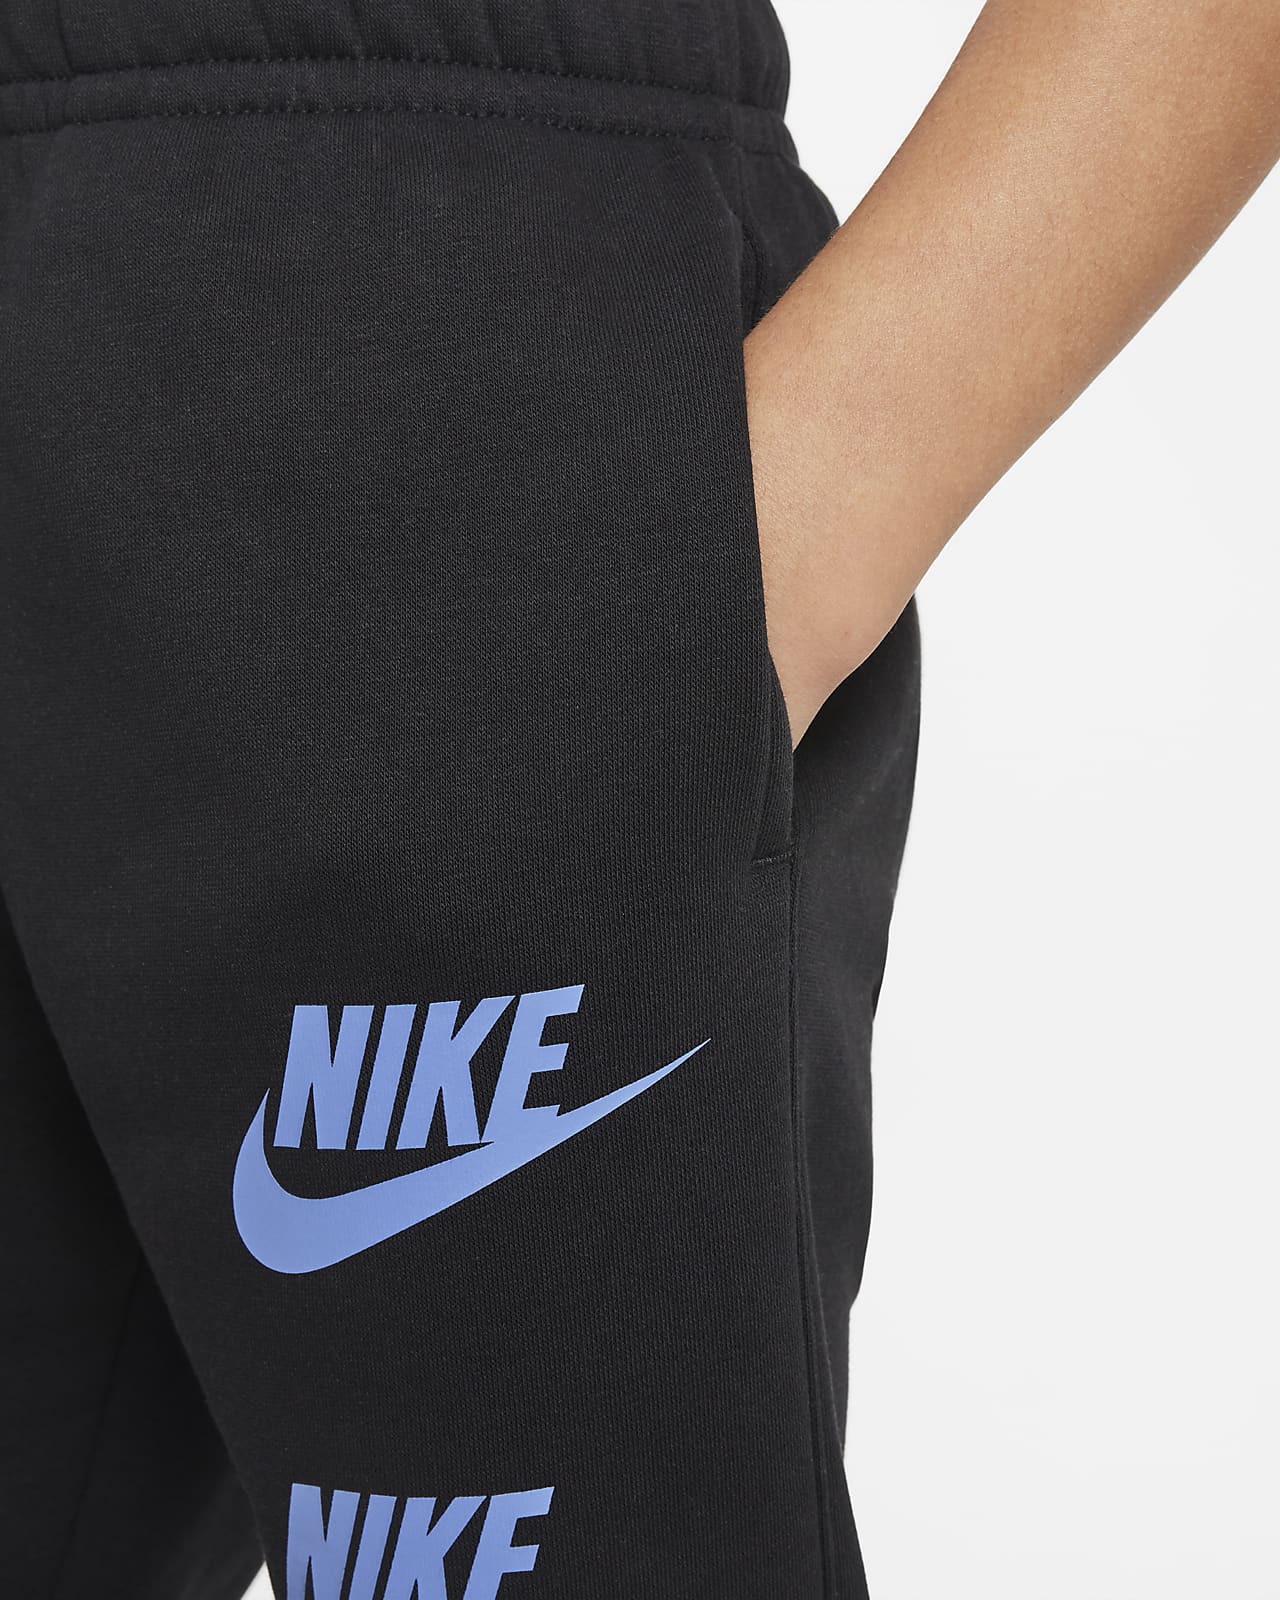 svag veltalende gås Nike Sportswear-cargobukser i fleece til større børn (drenge). Nike DK